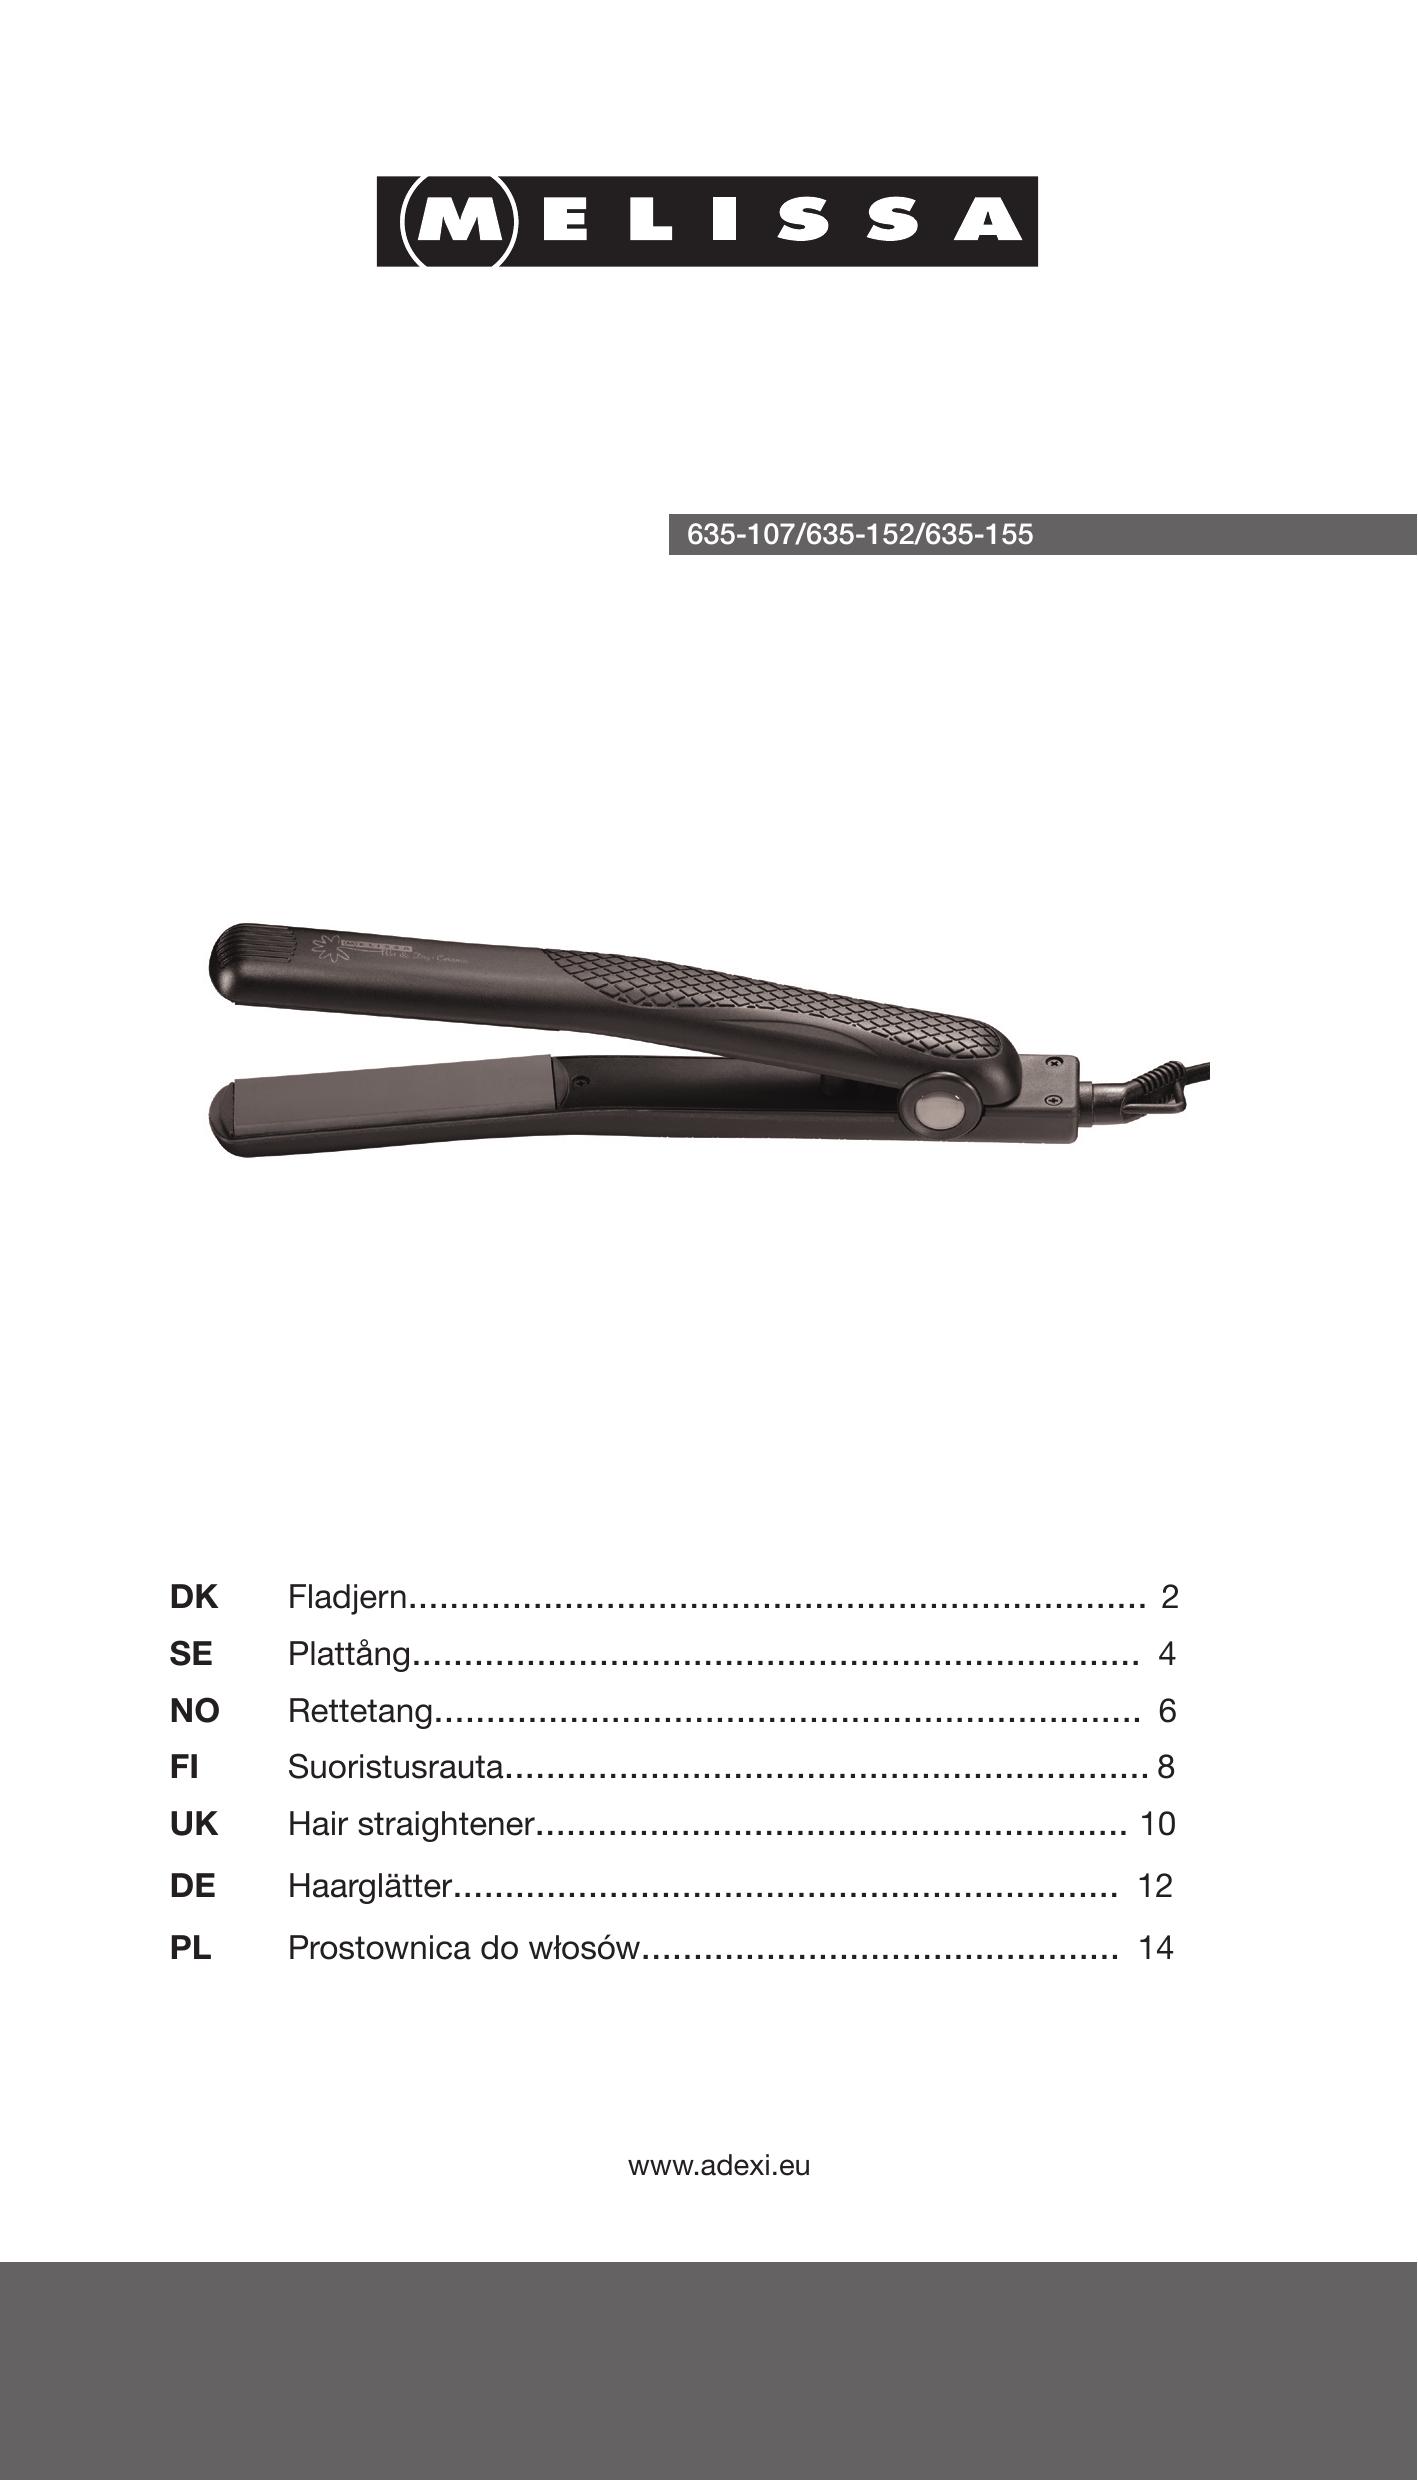 Melissa 635-155 Styling Iron User Manual